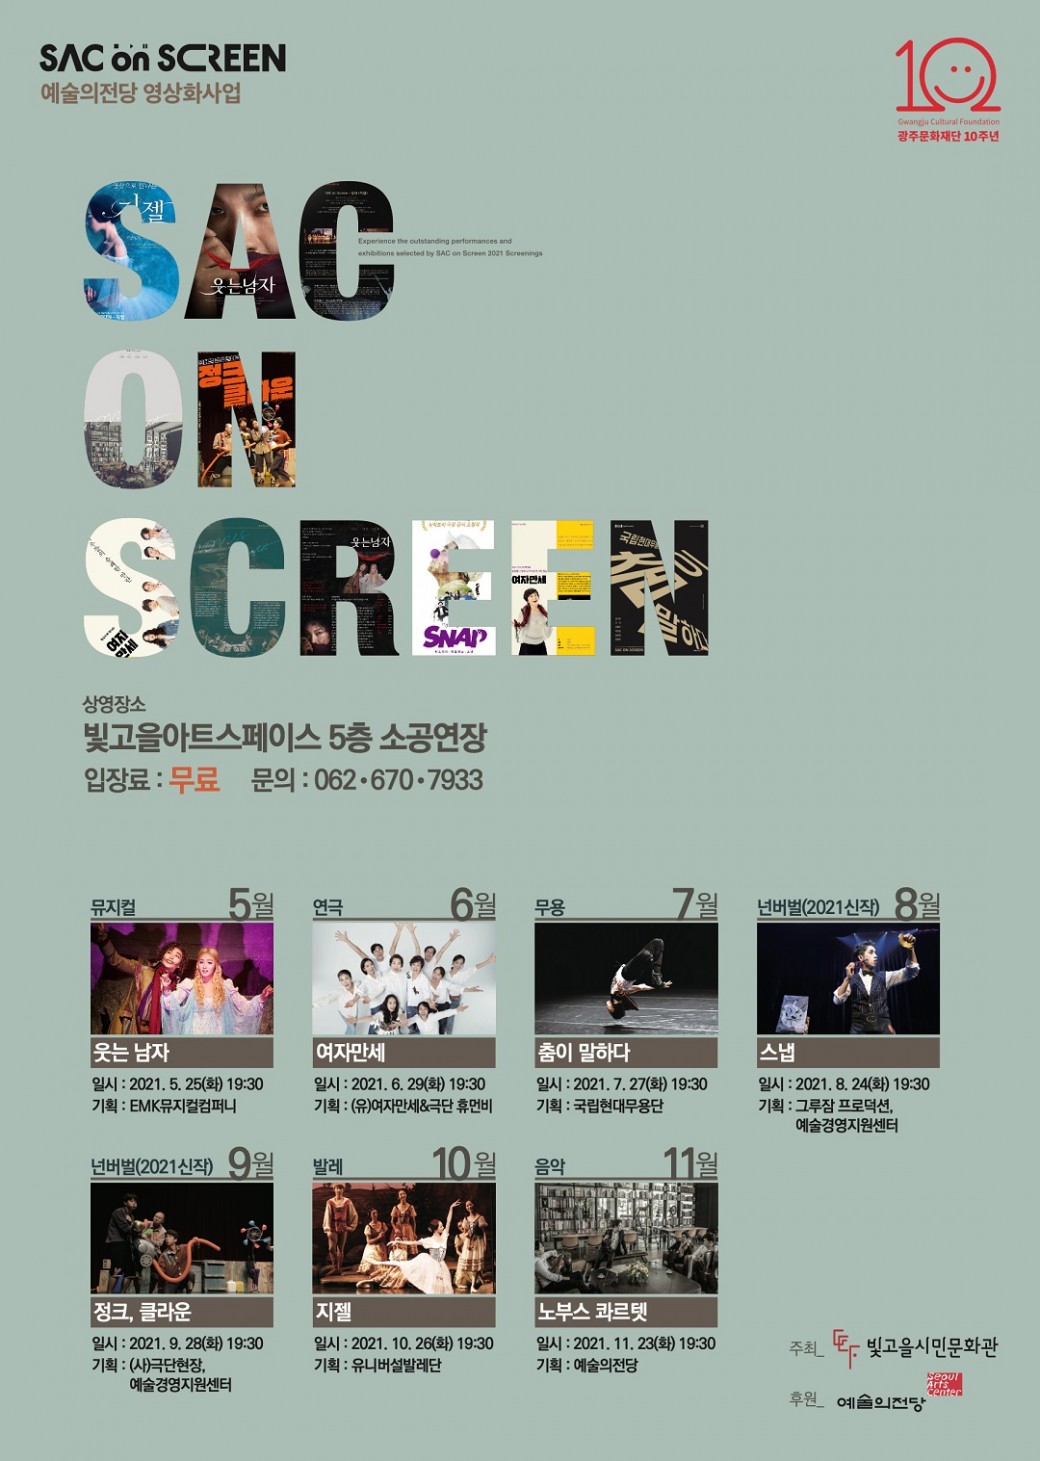 SAC ON SCREEN 상영(웃는남자) | 예술의전당 영상화사업으로 제작된 우수공연 콘텐츠 및 공연 영상 상영 